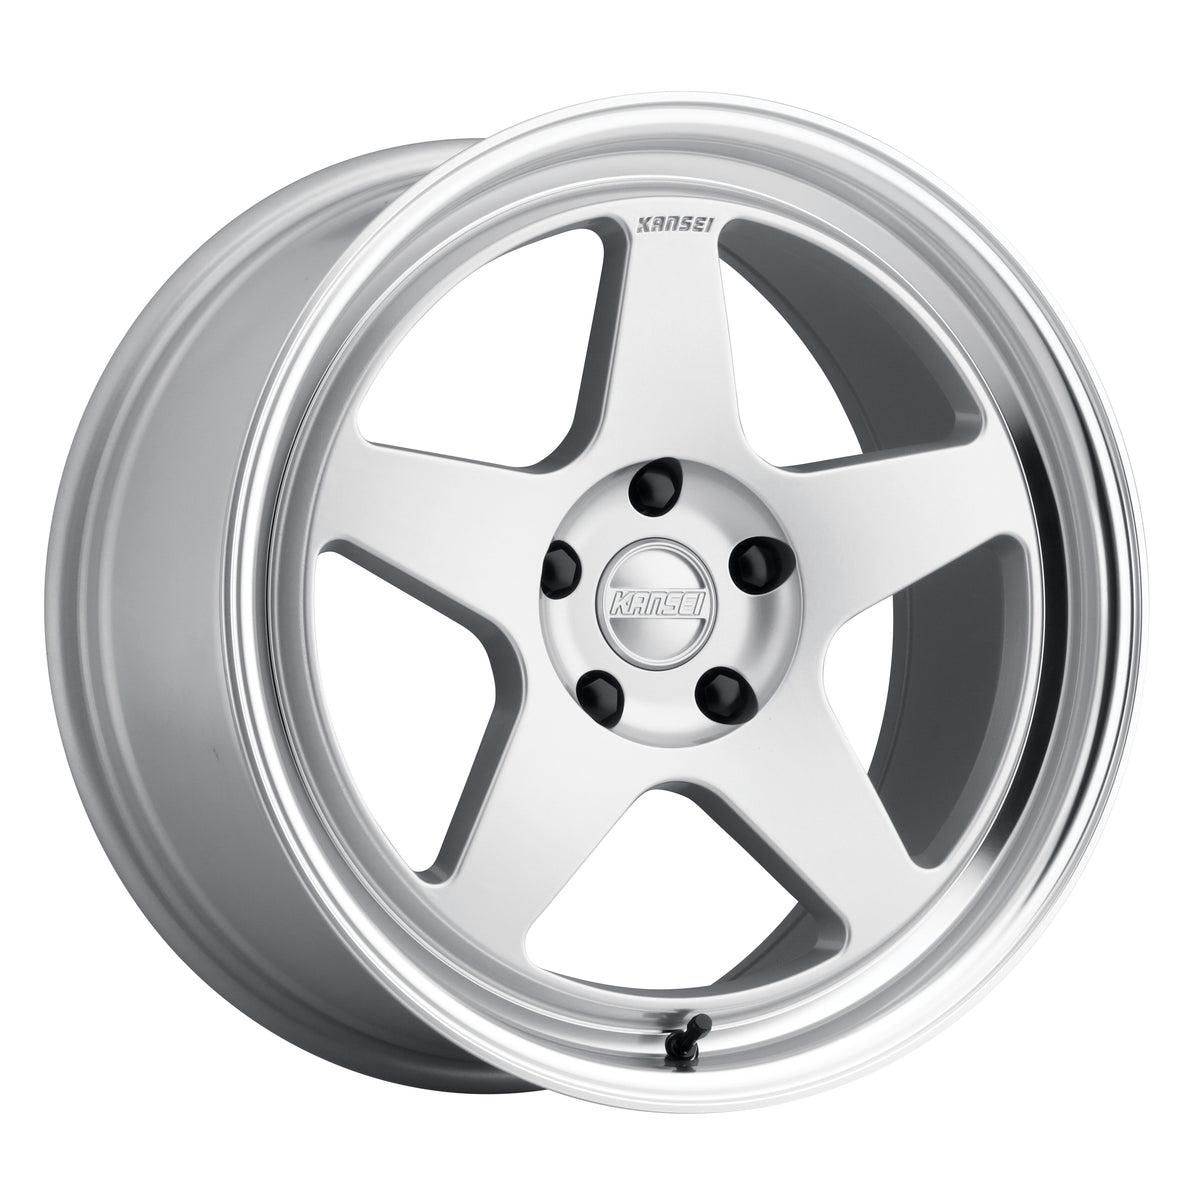 K12H KNP Wheel, Size: 19" x 9.50", Bolt Pattern: 5 x 112 mm, Backspace: 6.63" [Finish: Hyper Silver]